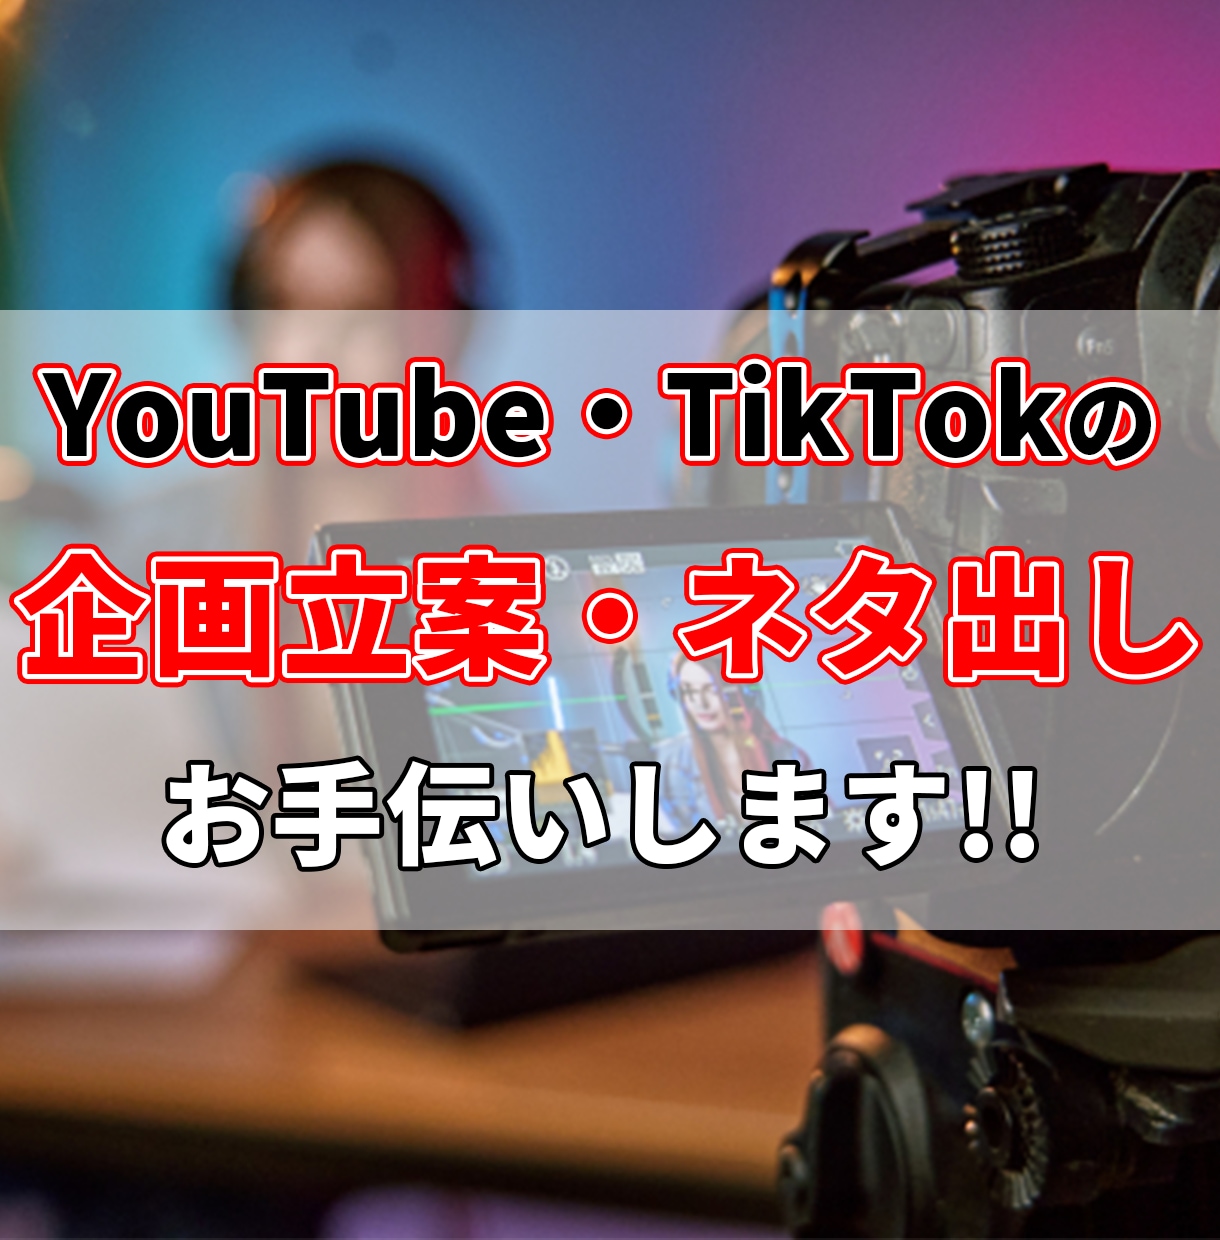 YouTube・TikTokの企画立案します 動画の企画・ネタに困っている方を全力でサポートします！ イメージ1